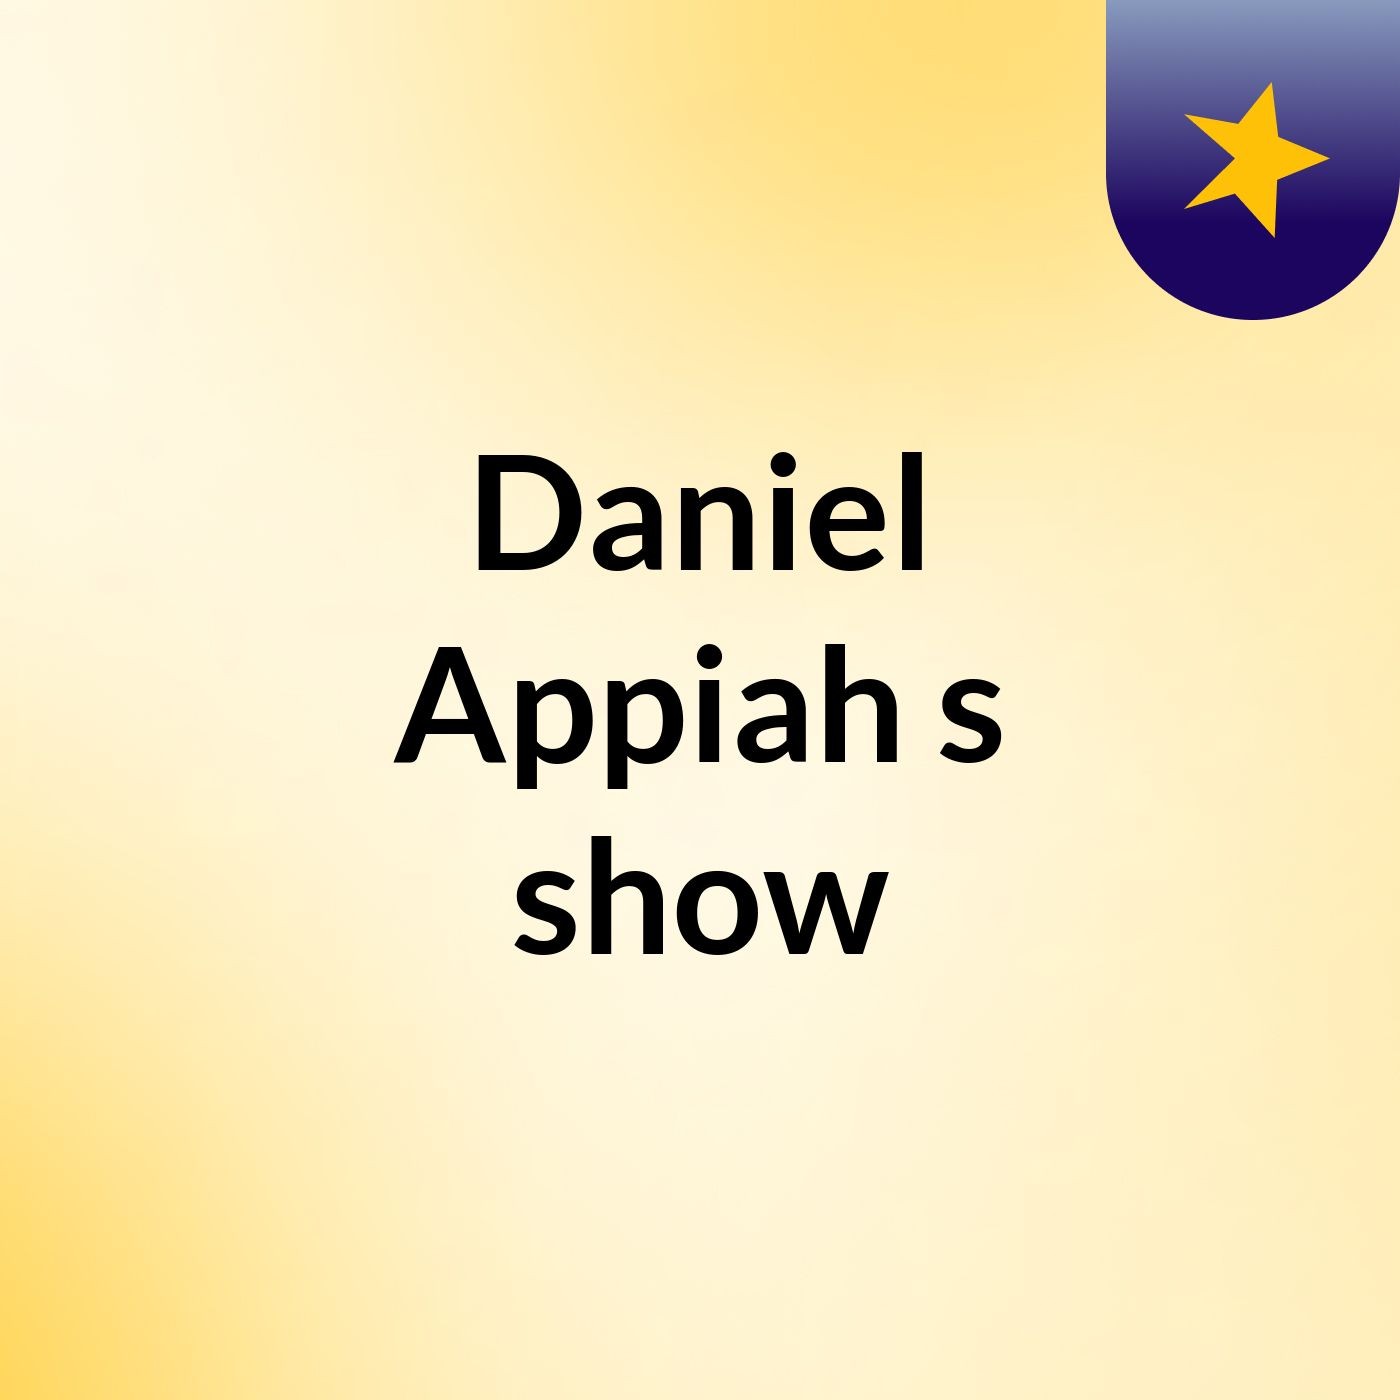 Daniel Appiah's show